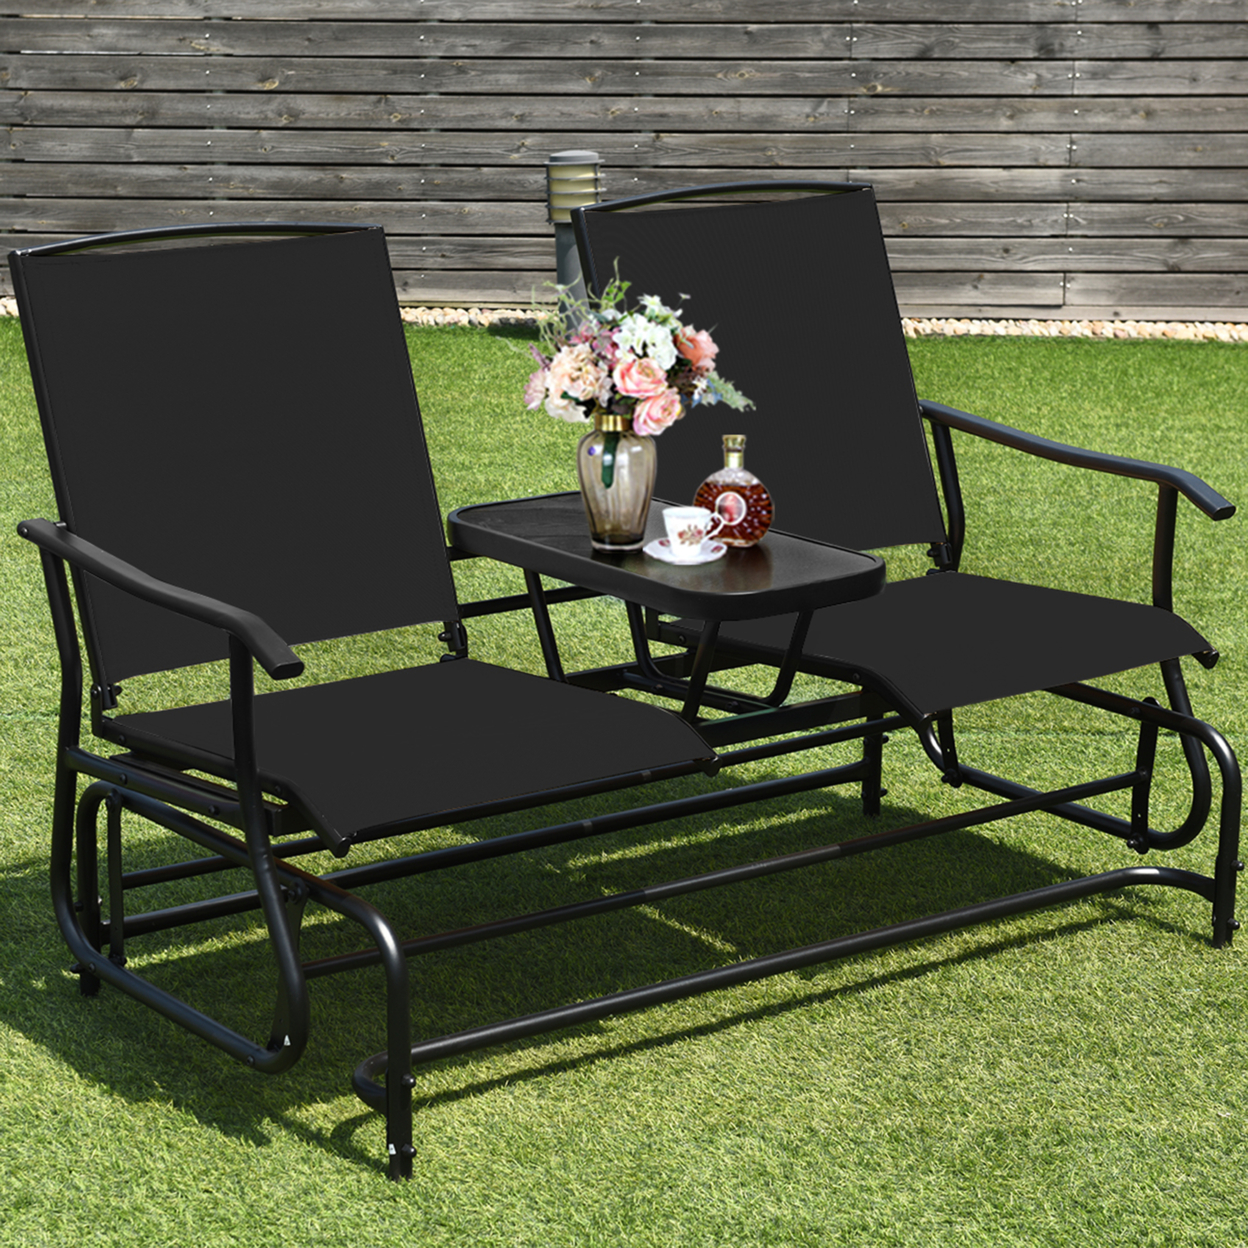 Patio 2-Person Glider Rocking Chair Loveseat Garden W/ Tempered Glass Table Black